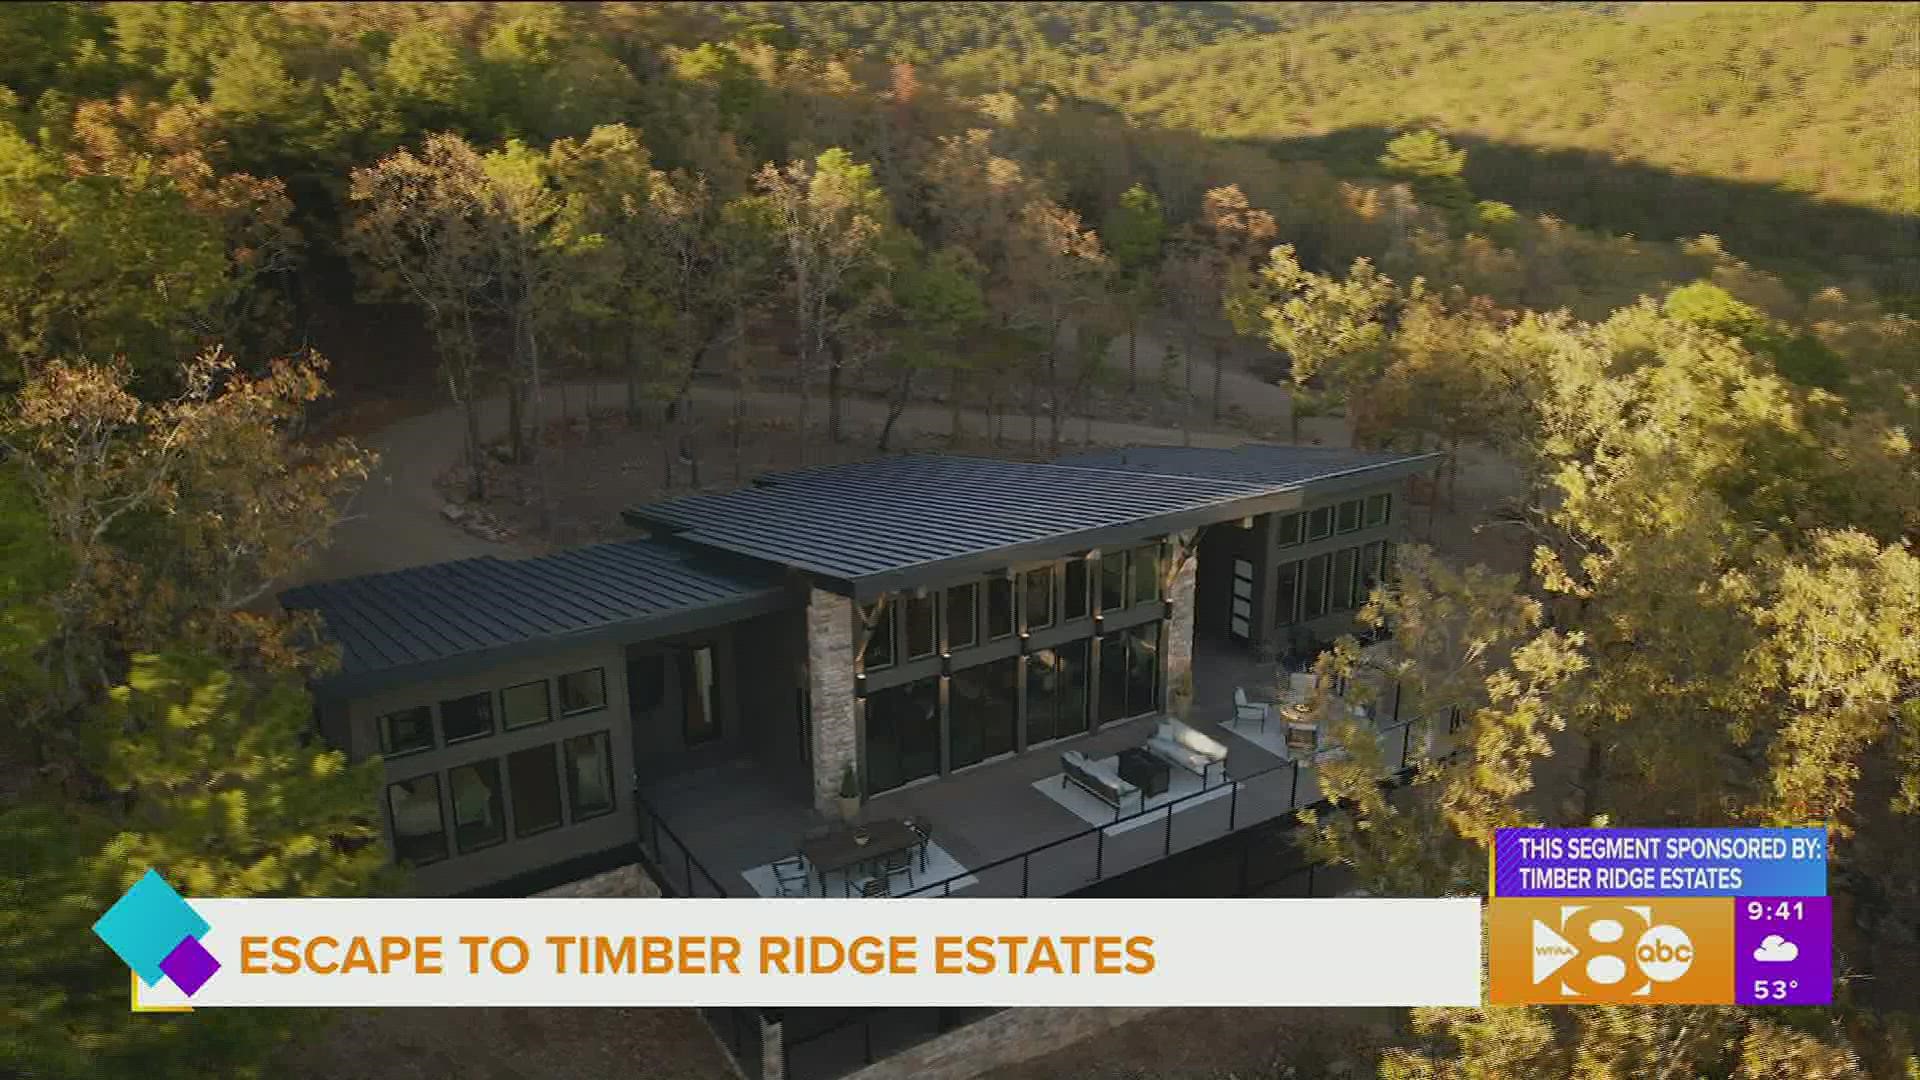 This segment is sponsored by: Timber Ridge Estates